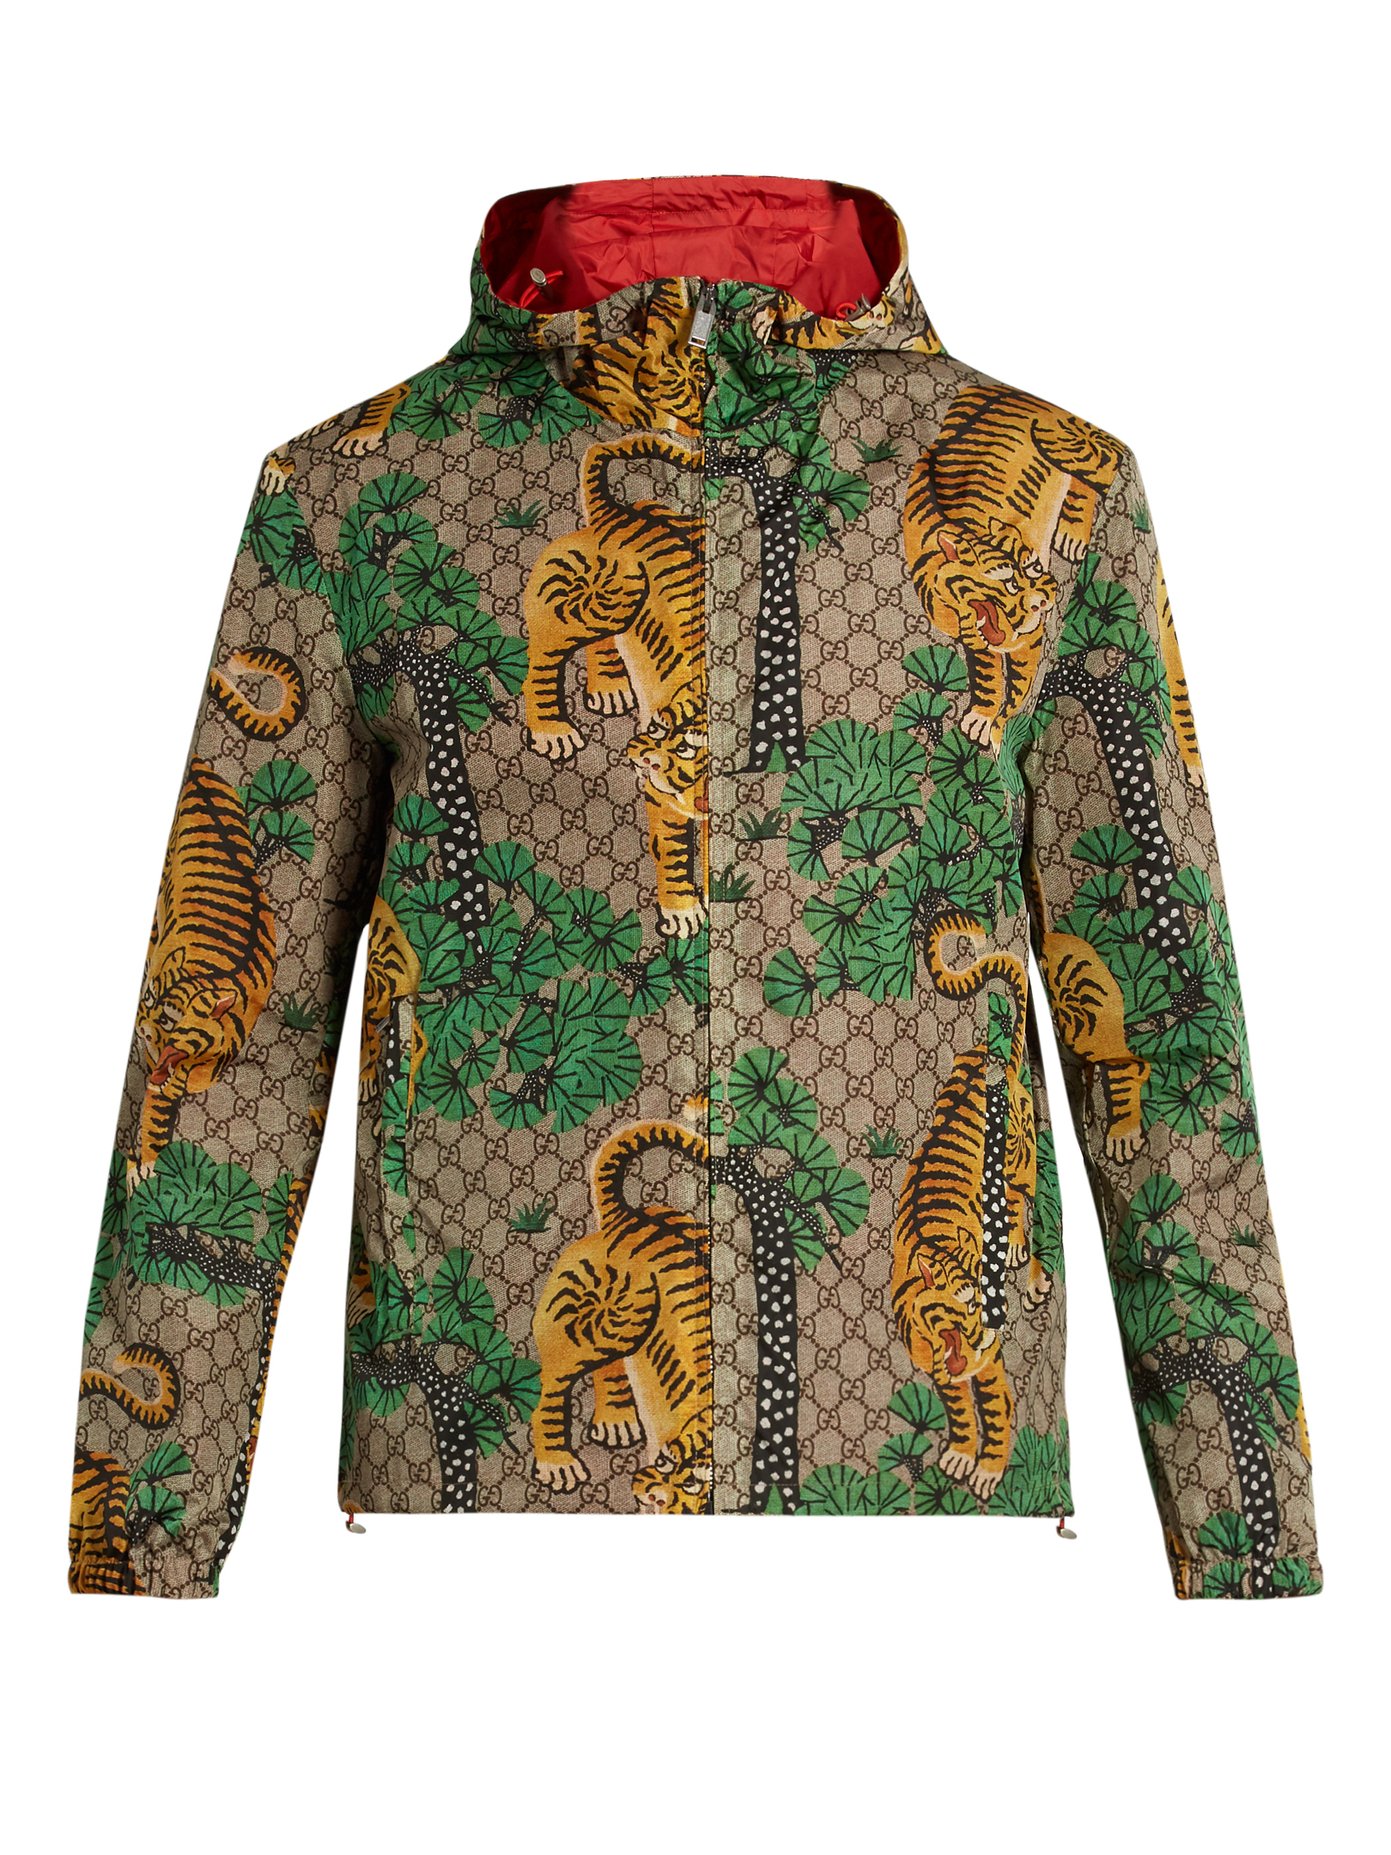 bengal tiger gucci jacket